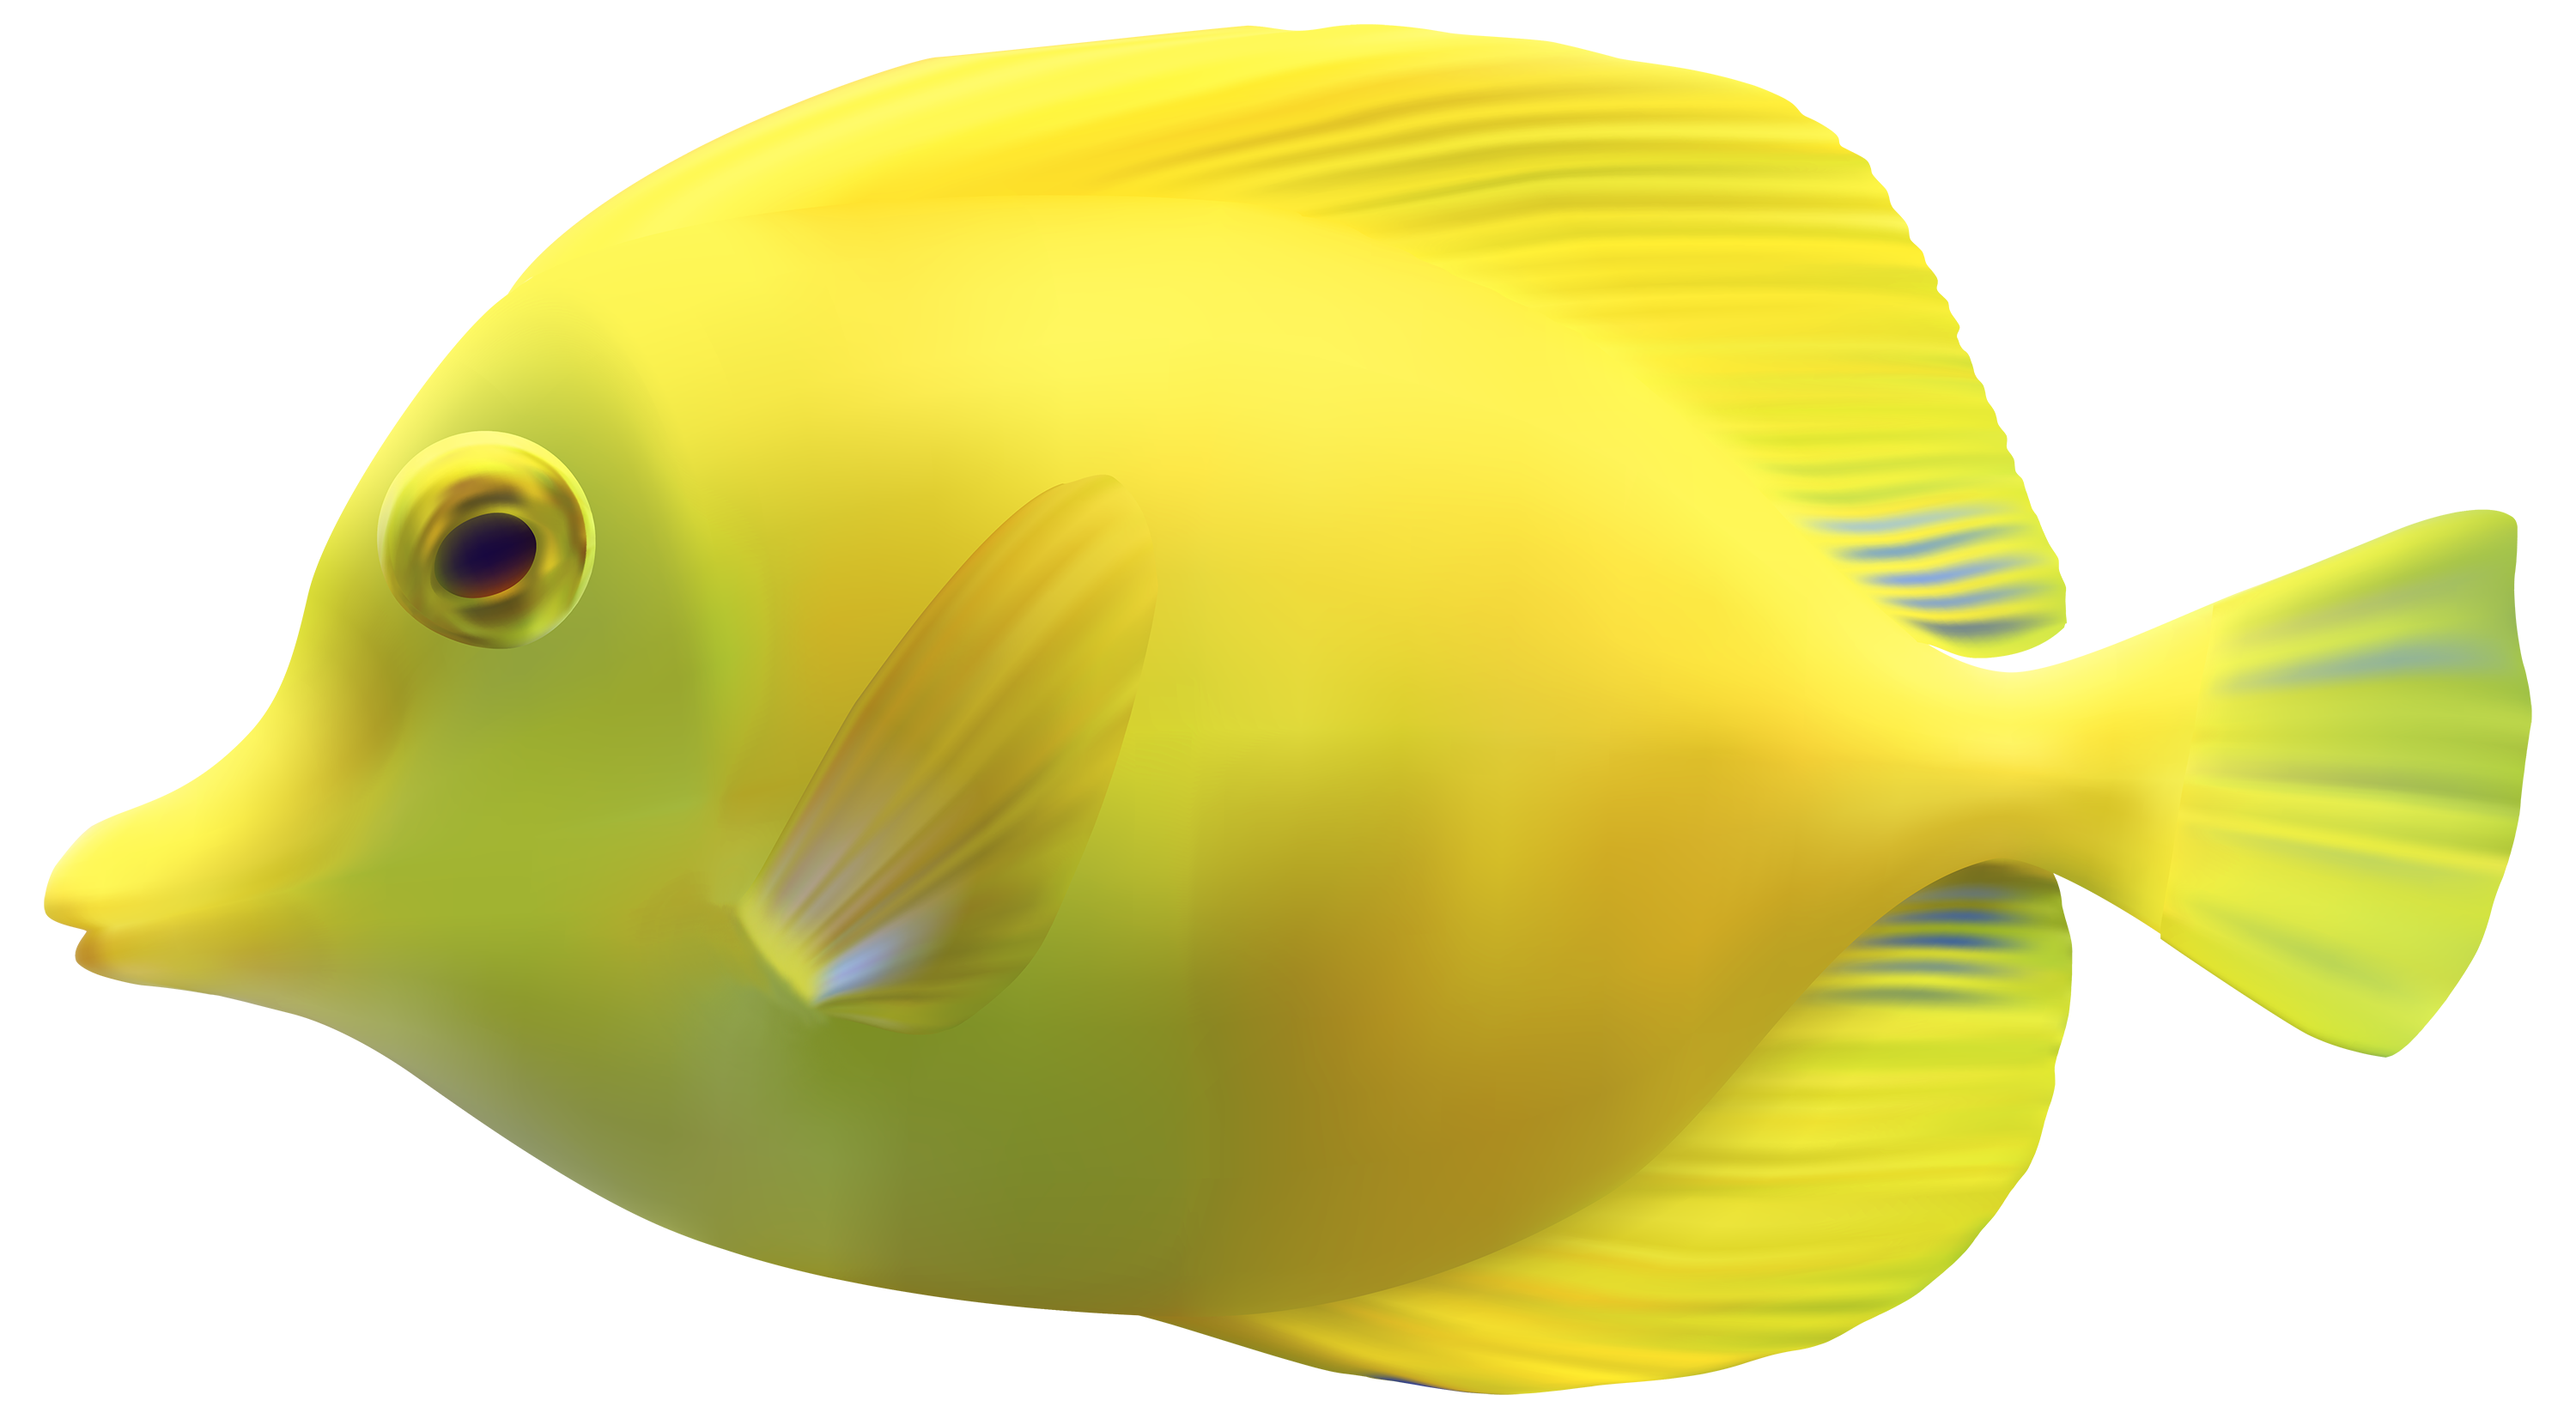 Fish photo